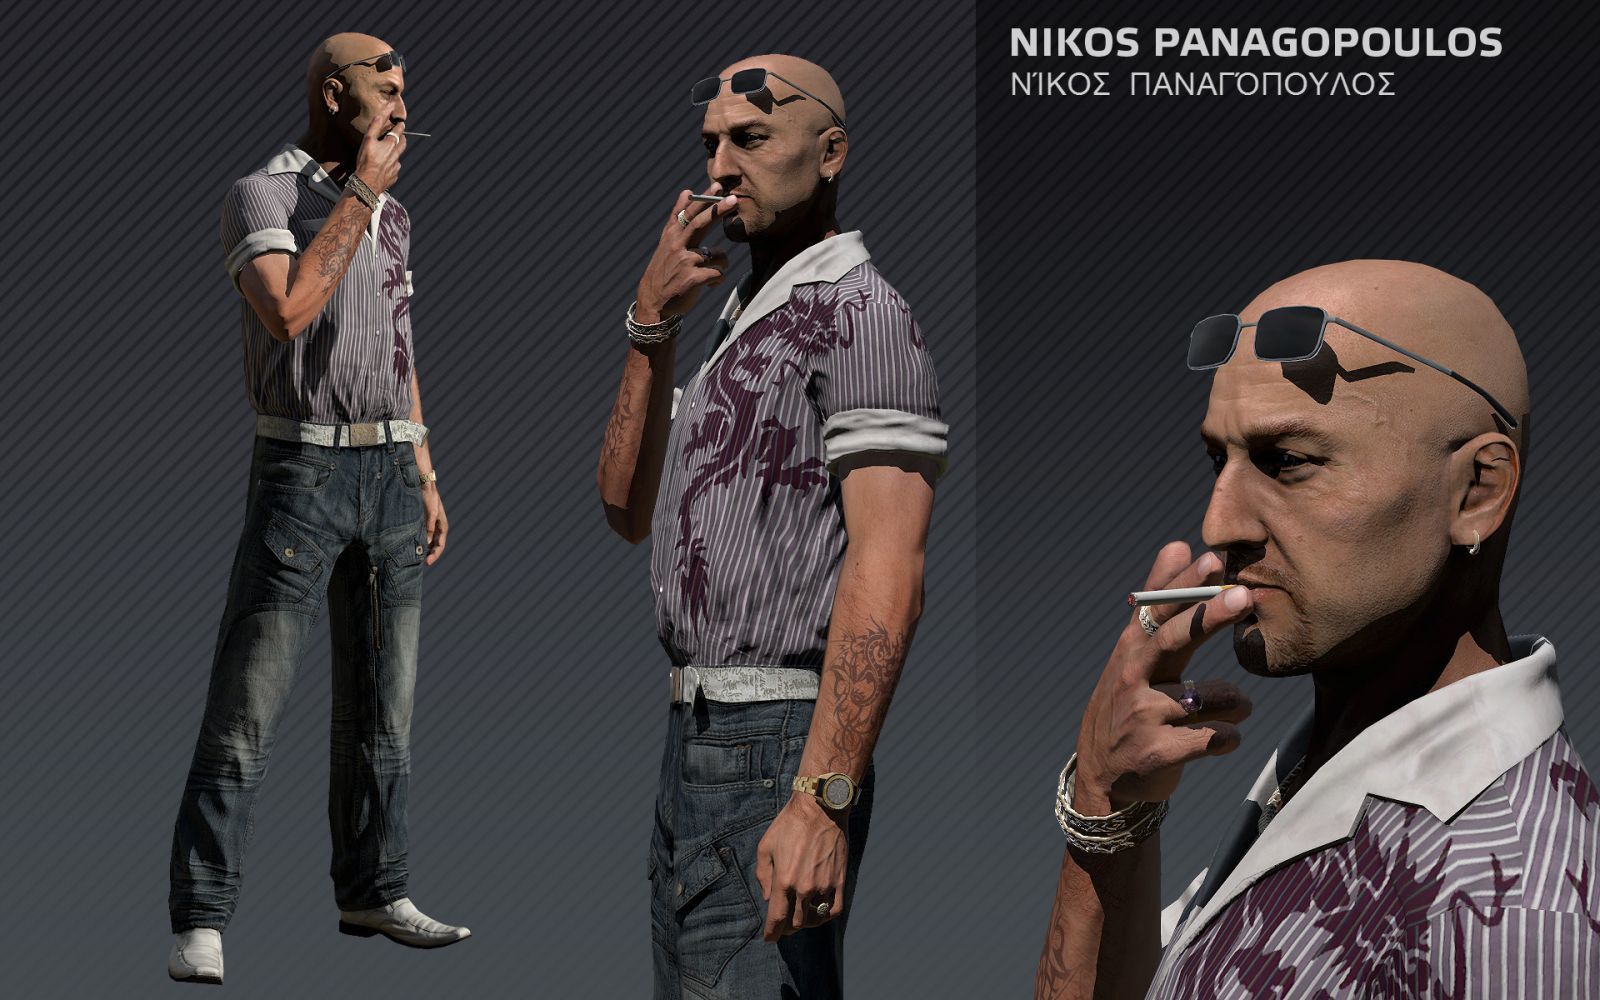 artwork special characters Nikos2